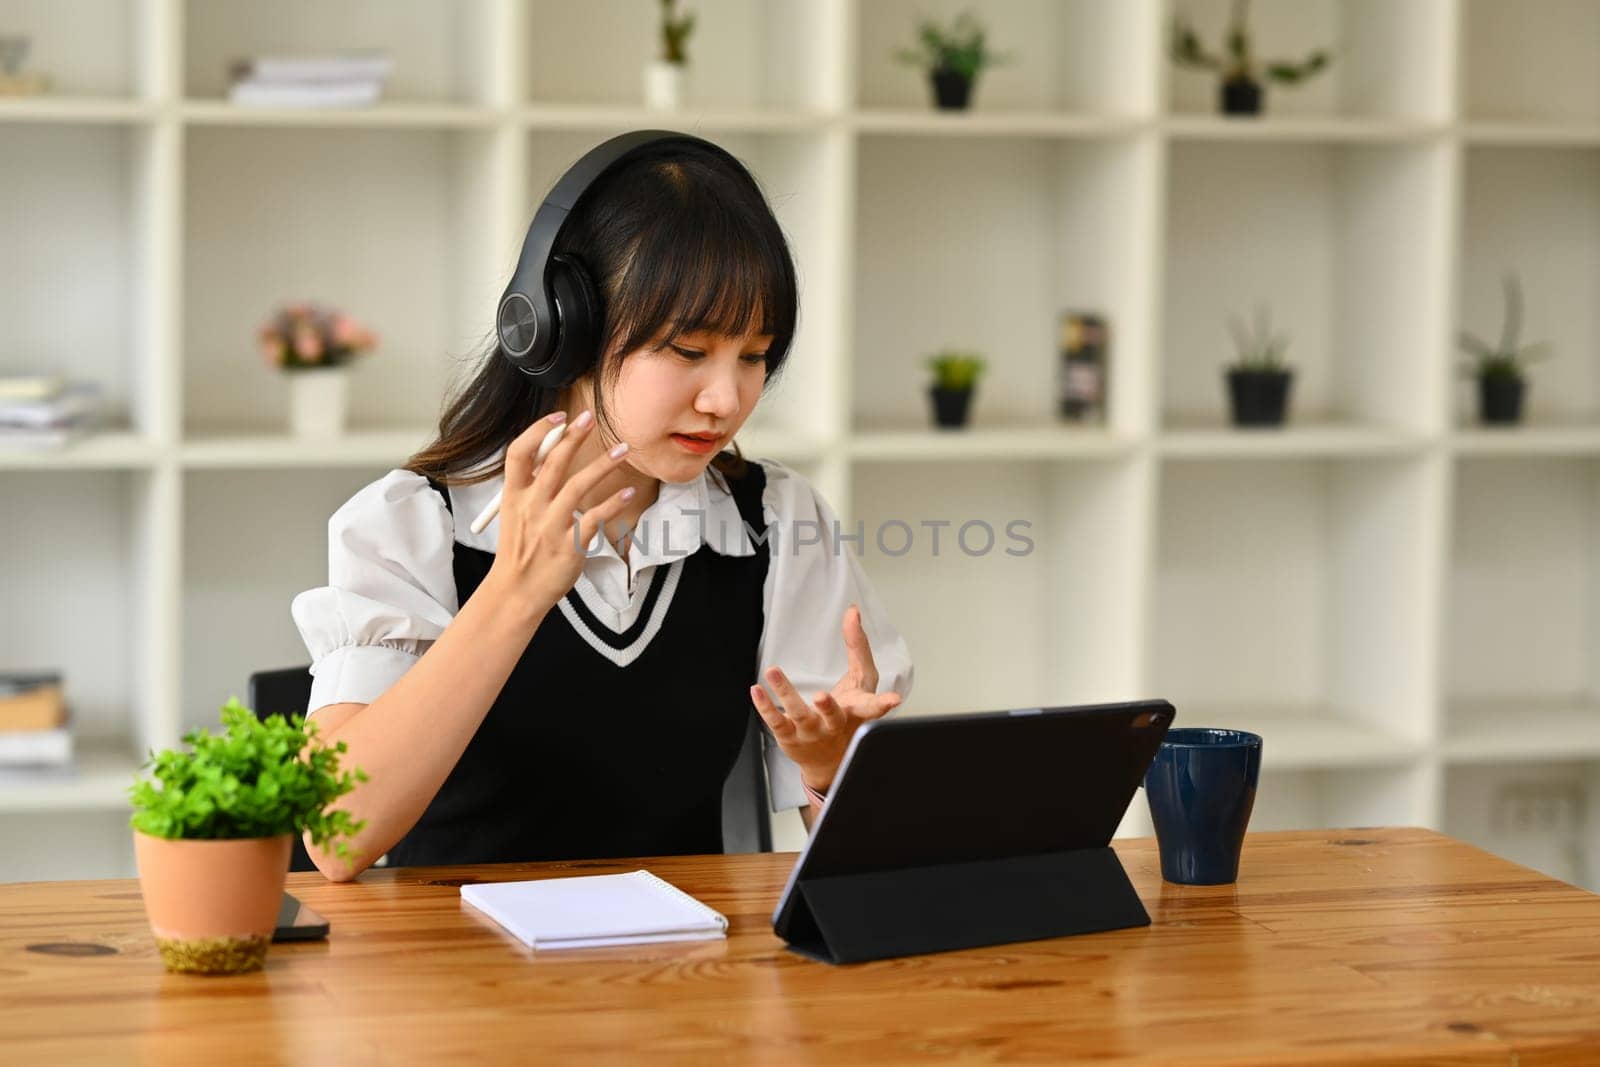 Pretty asian female student wearing headphones learning online, watching webinar class on laptop by prathanchorruangsak